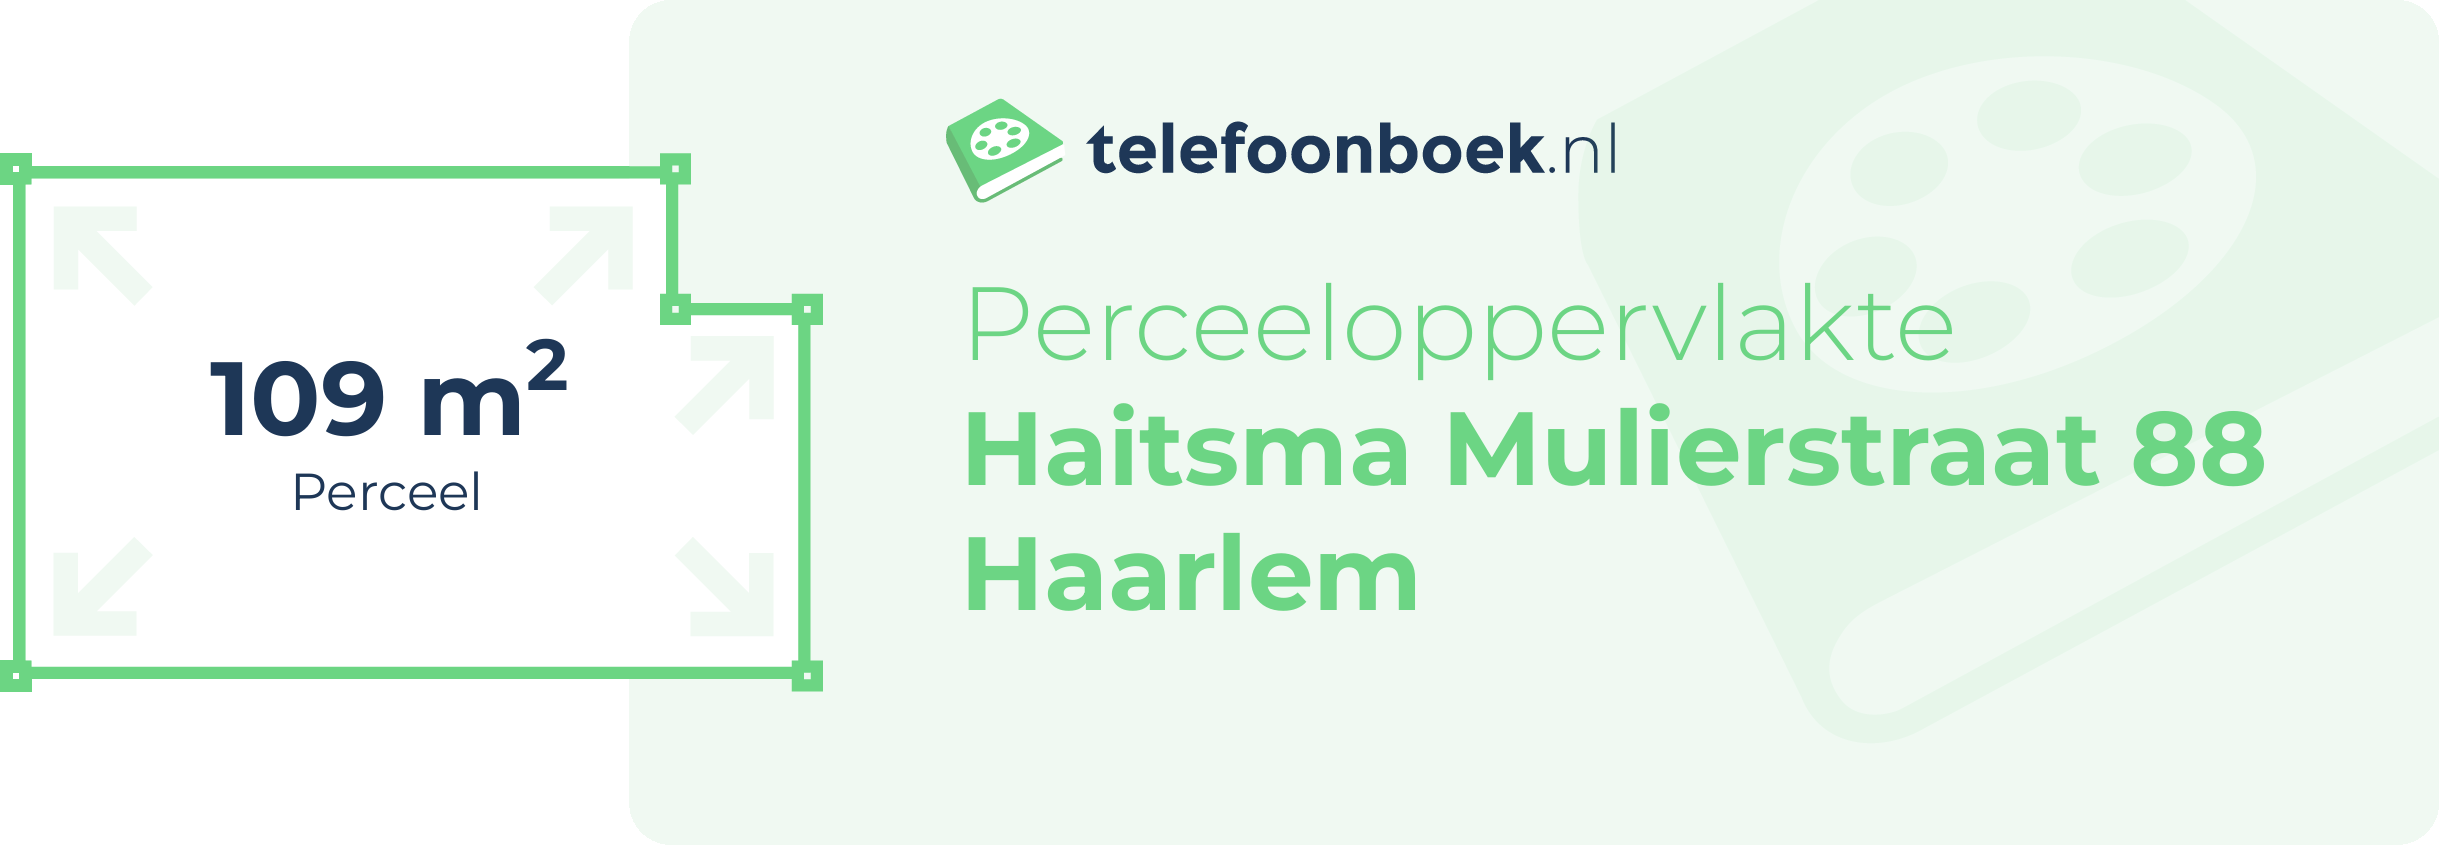 Perceeloppervlakte Haitsma Mulierstraat 88 Haarlem